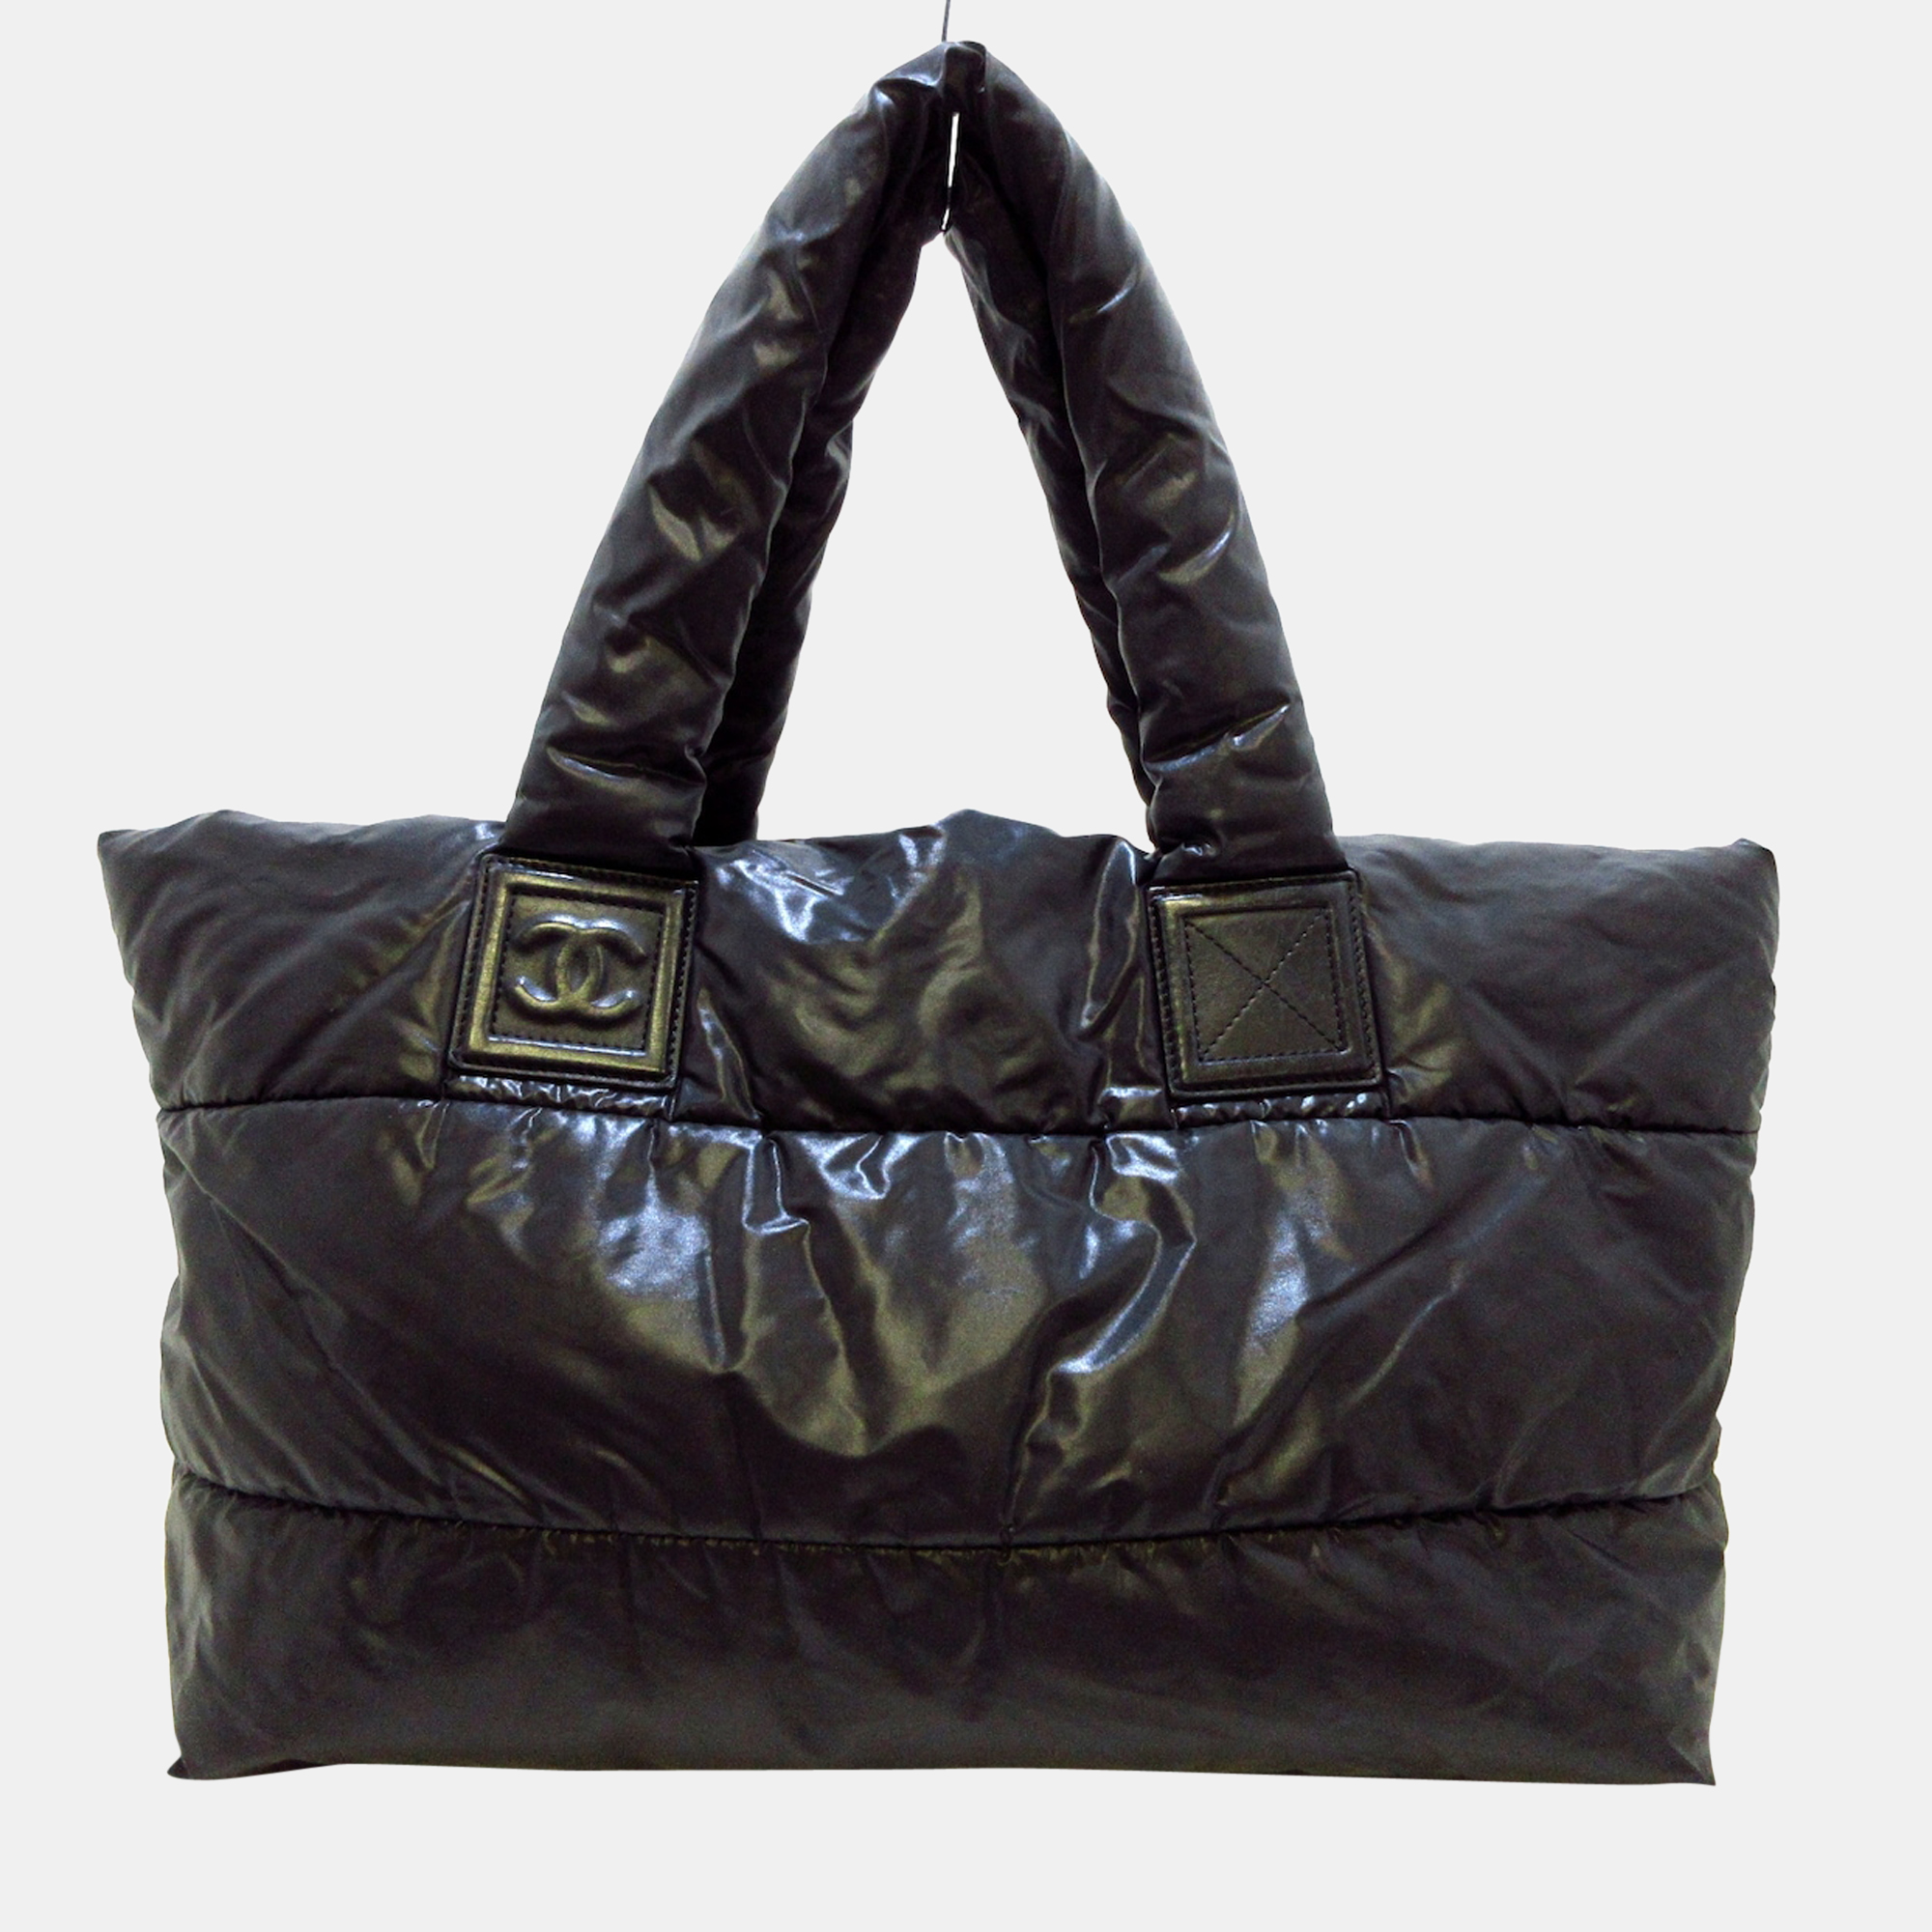 CHANEL Cocoon Bag  Authenticity Guaranteed  eBay